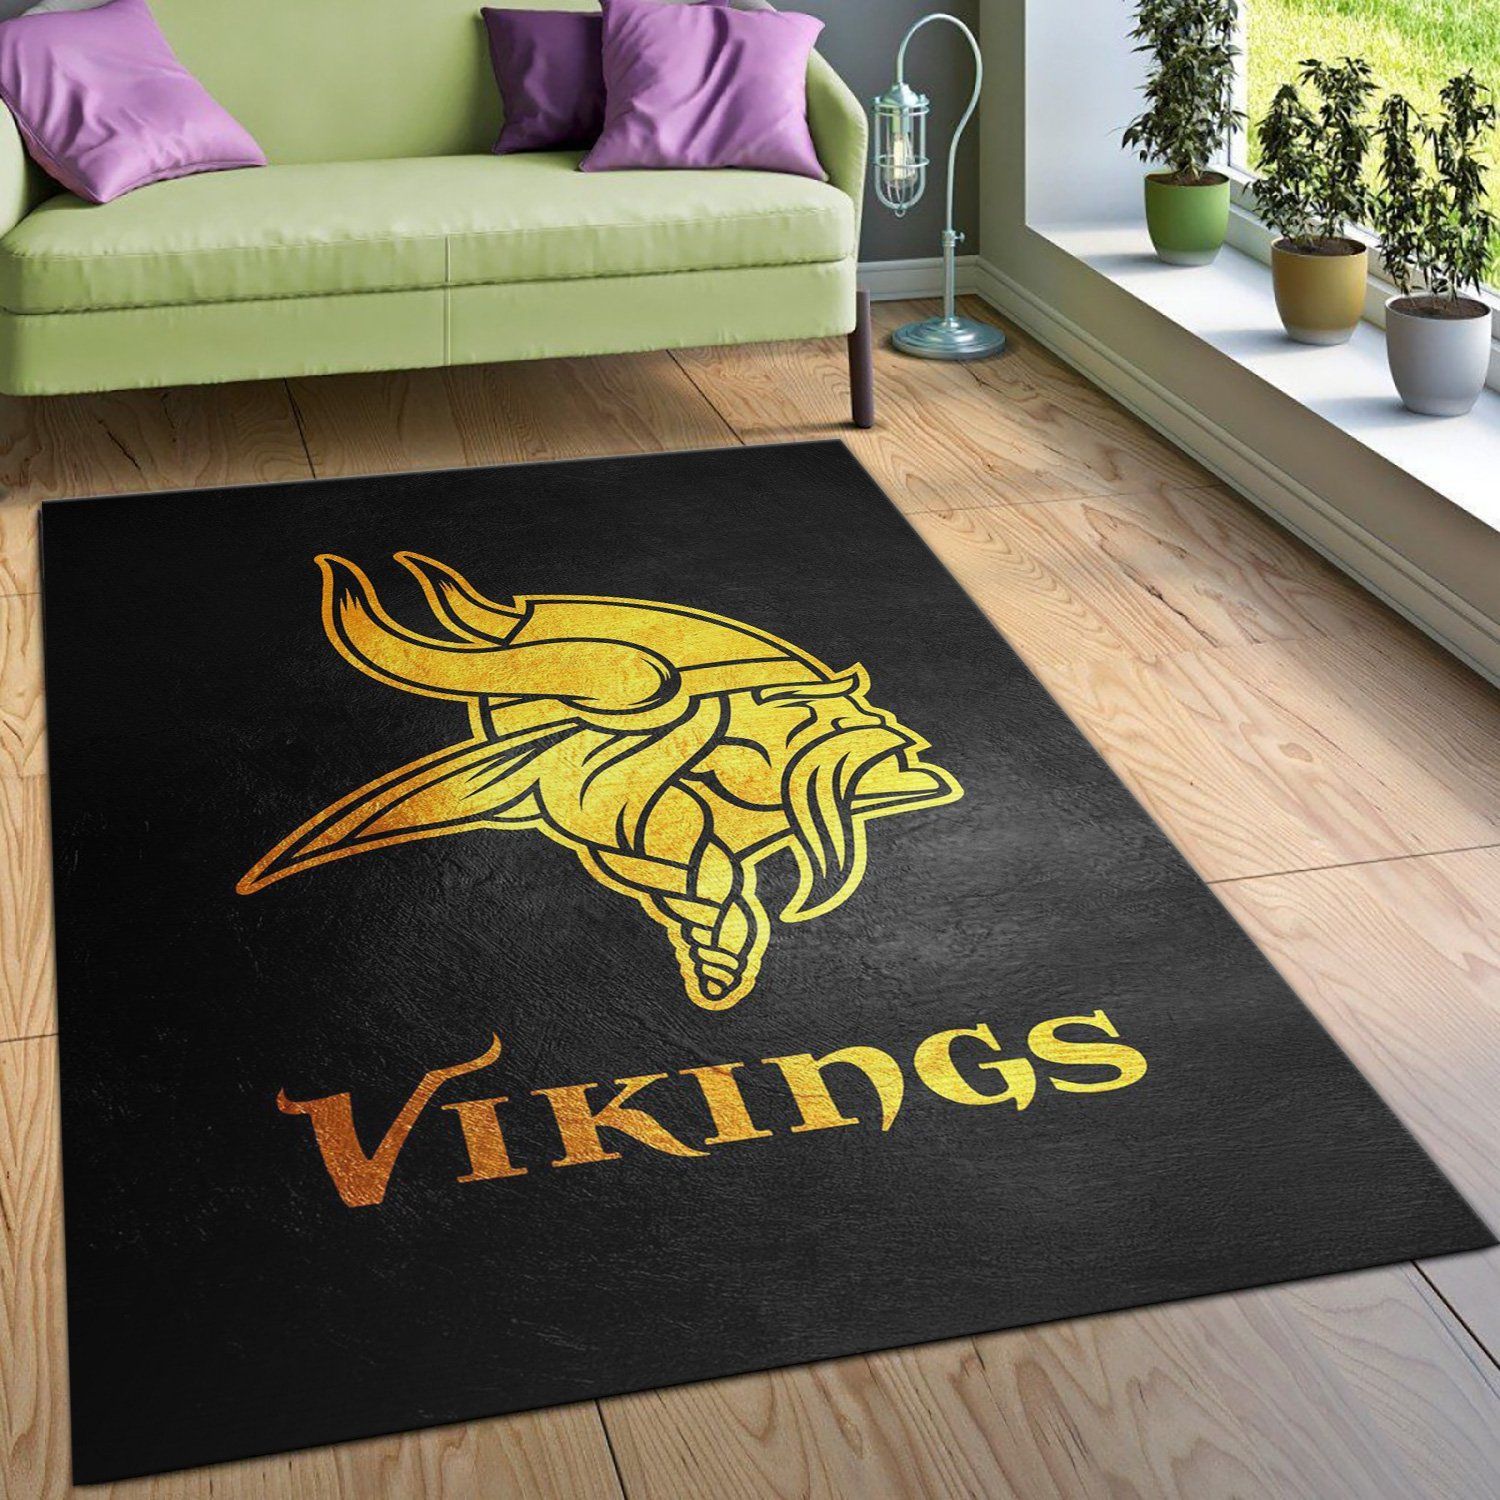 Minnesota Vikings NFL Area Rug, Living room and bedroom Rug, US Gift Decor - Indoor Outdoor Rugs 2